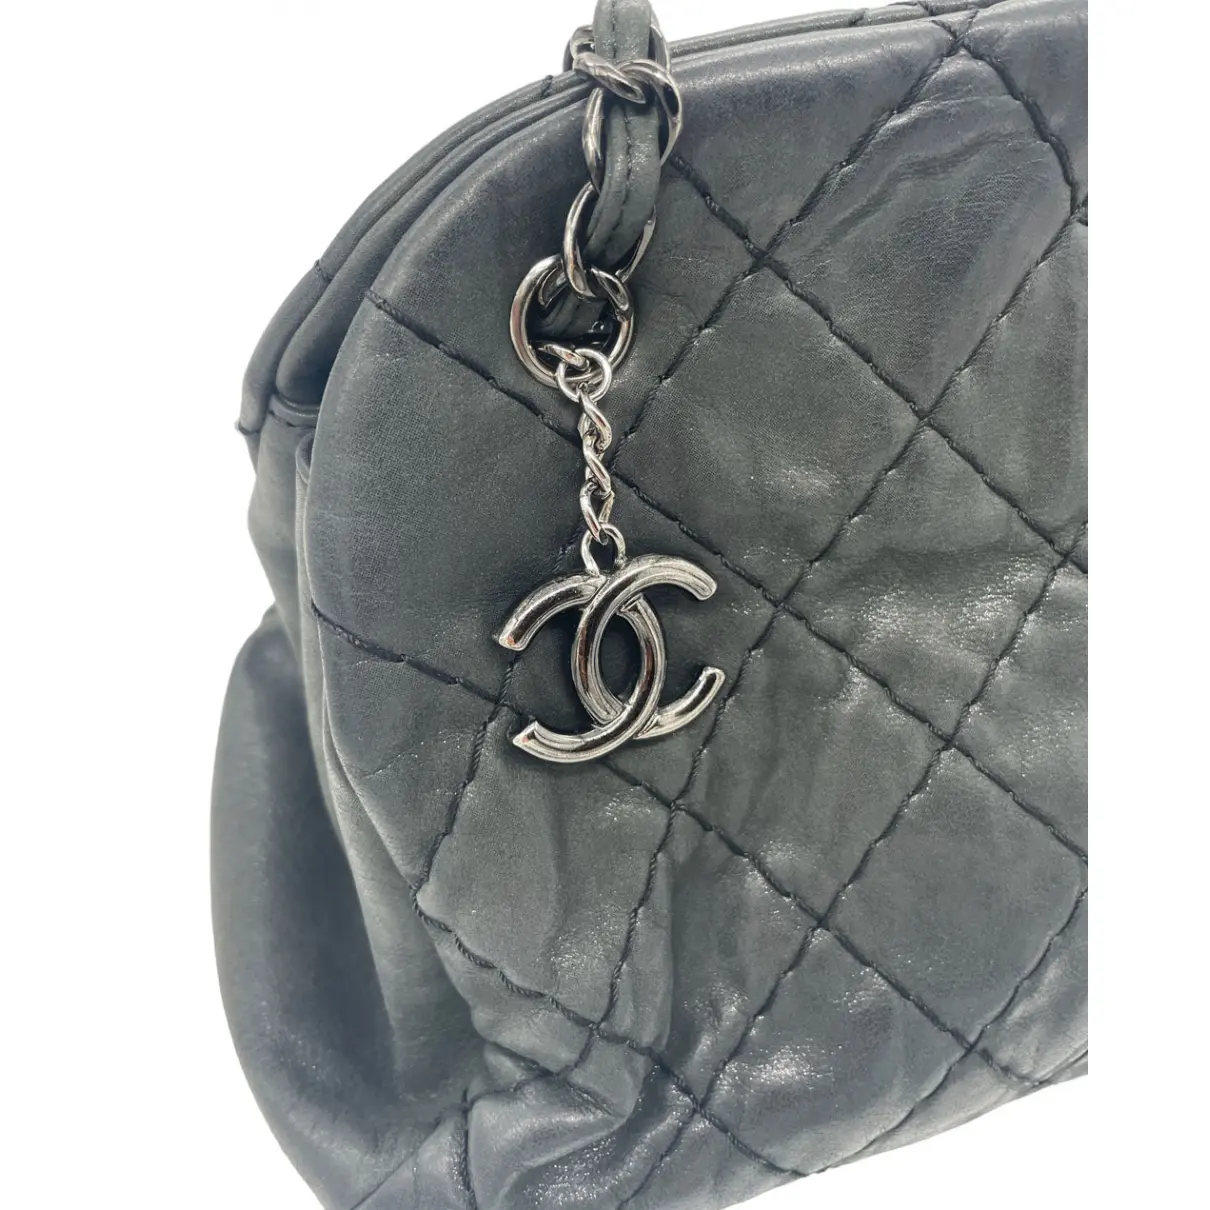 Mademoiselle leather tote Chanel - Vintage